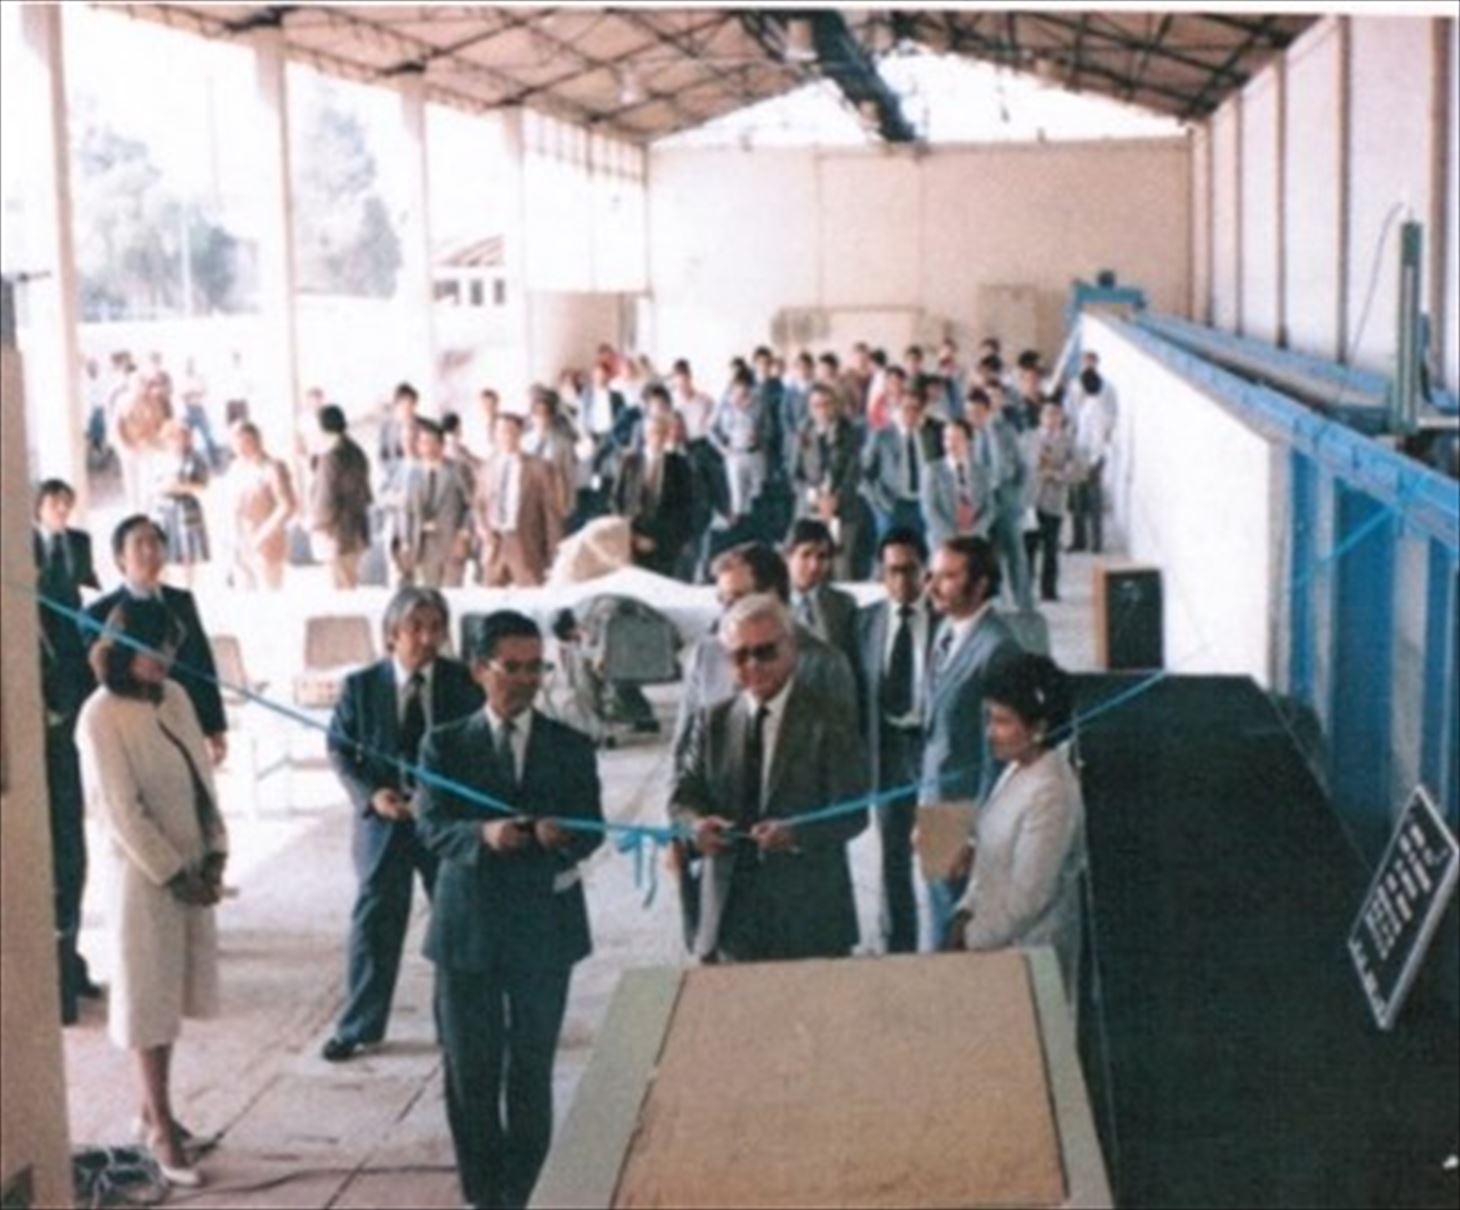 Photo 2: Port Hydraulics Center Opening Ceremony (December 1985)